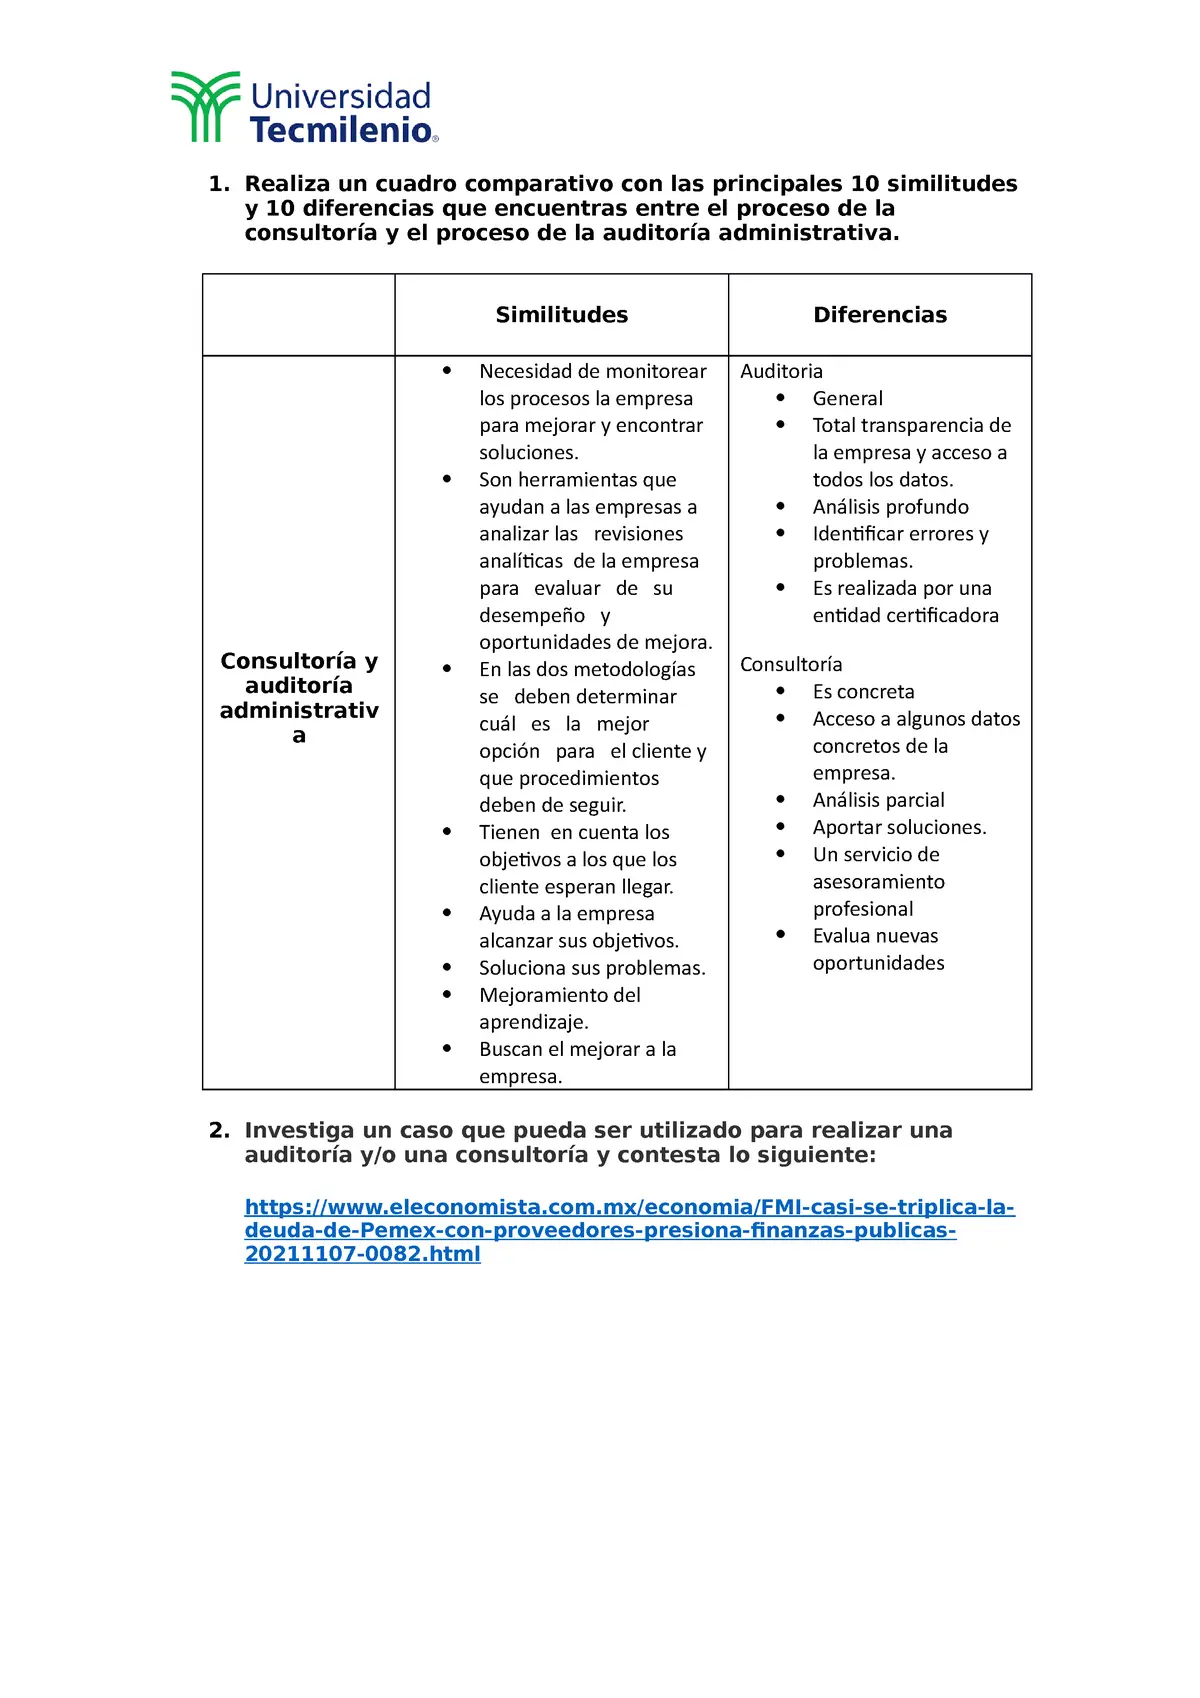 cuadro comparativo auditoria y consultoria - Qué es la auditoría y consultoría administrativa